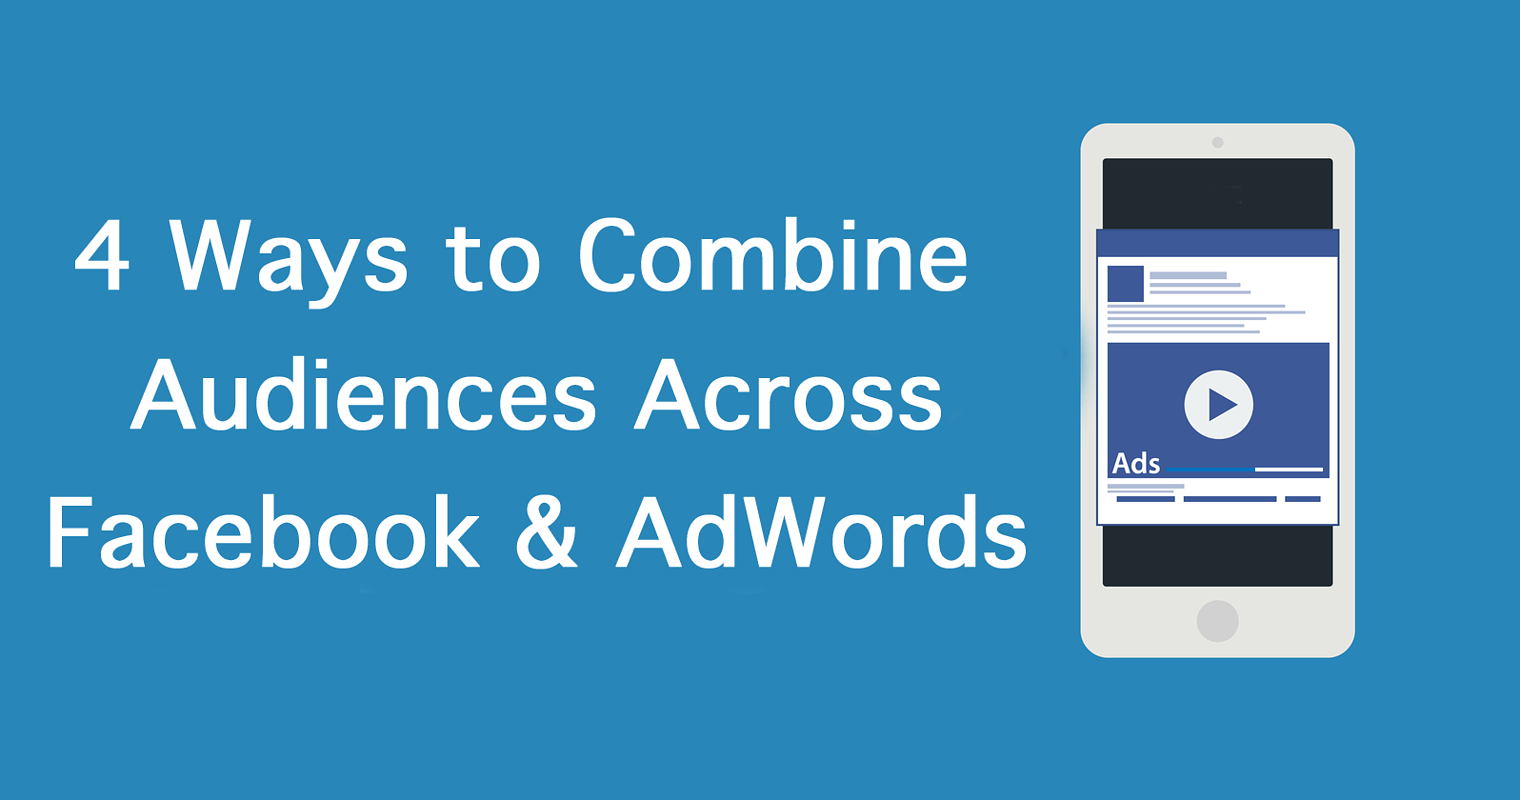 4 Ways to Combine Audiences Across Facebook & AdWords